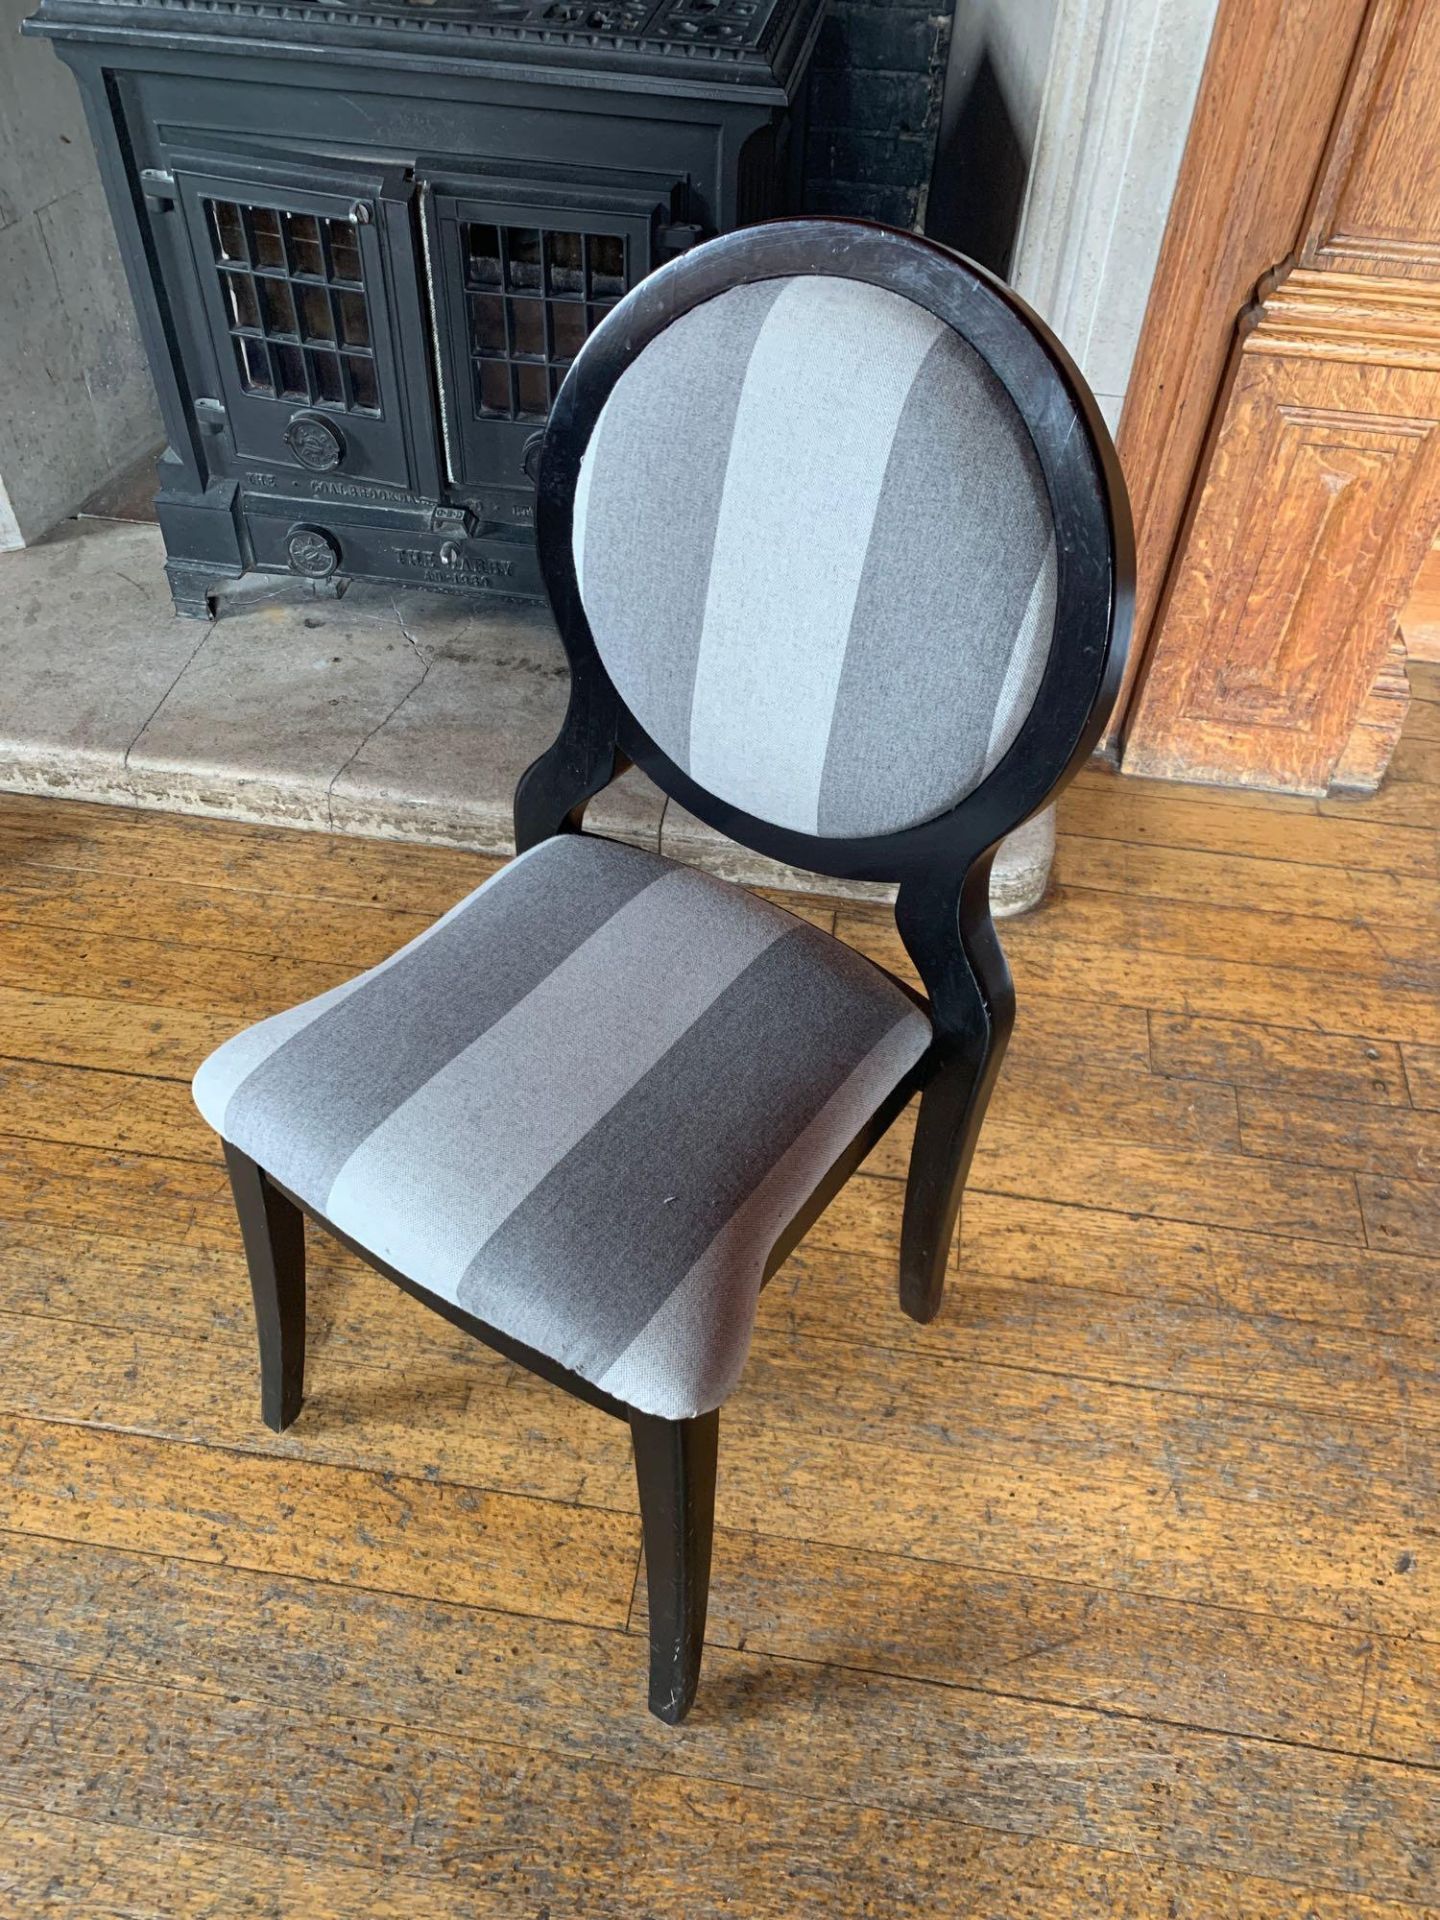 Burgess Furnitures Furniture Round Back Grey Striped Banquet Chairs x 10 95 x 43 x 98cm